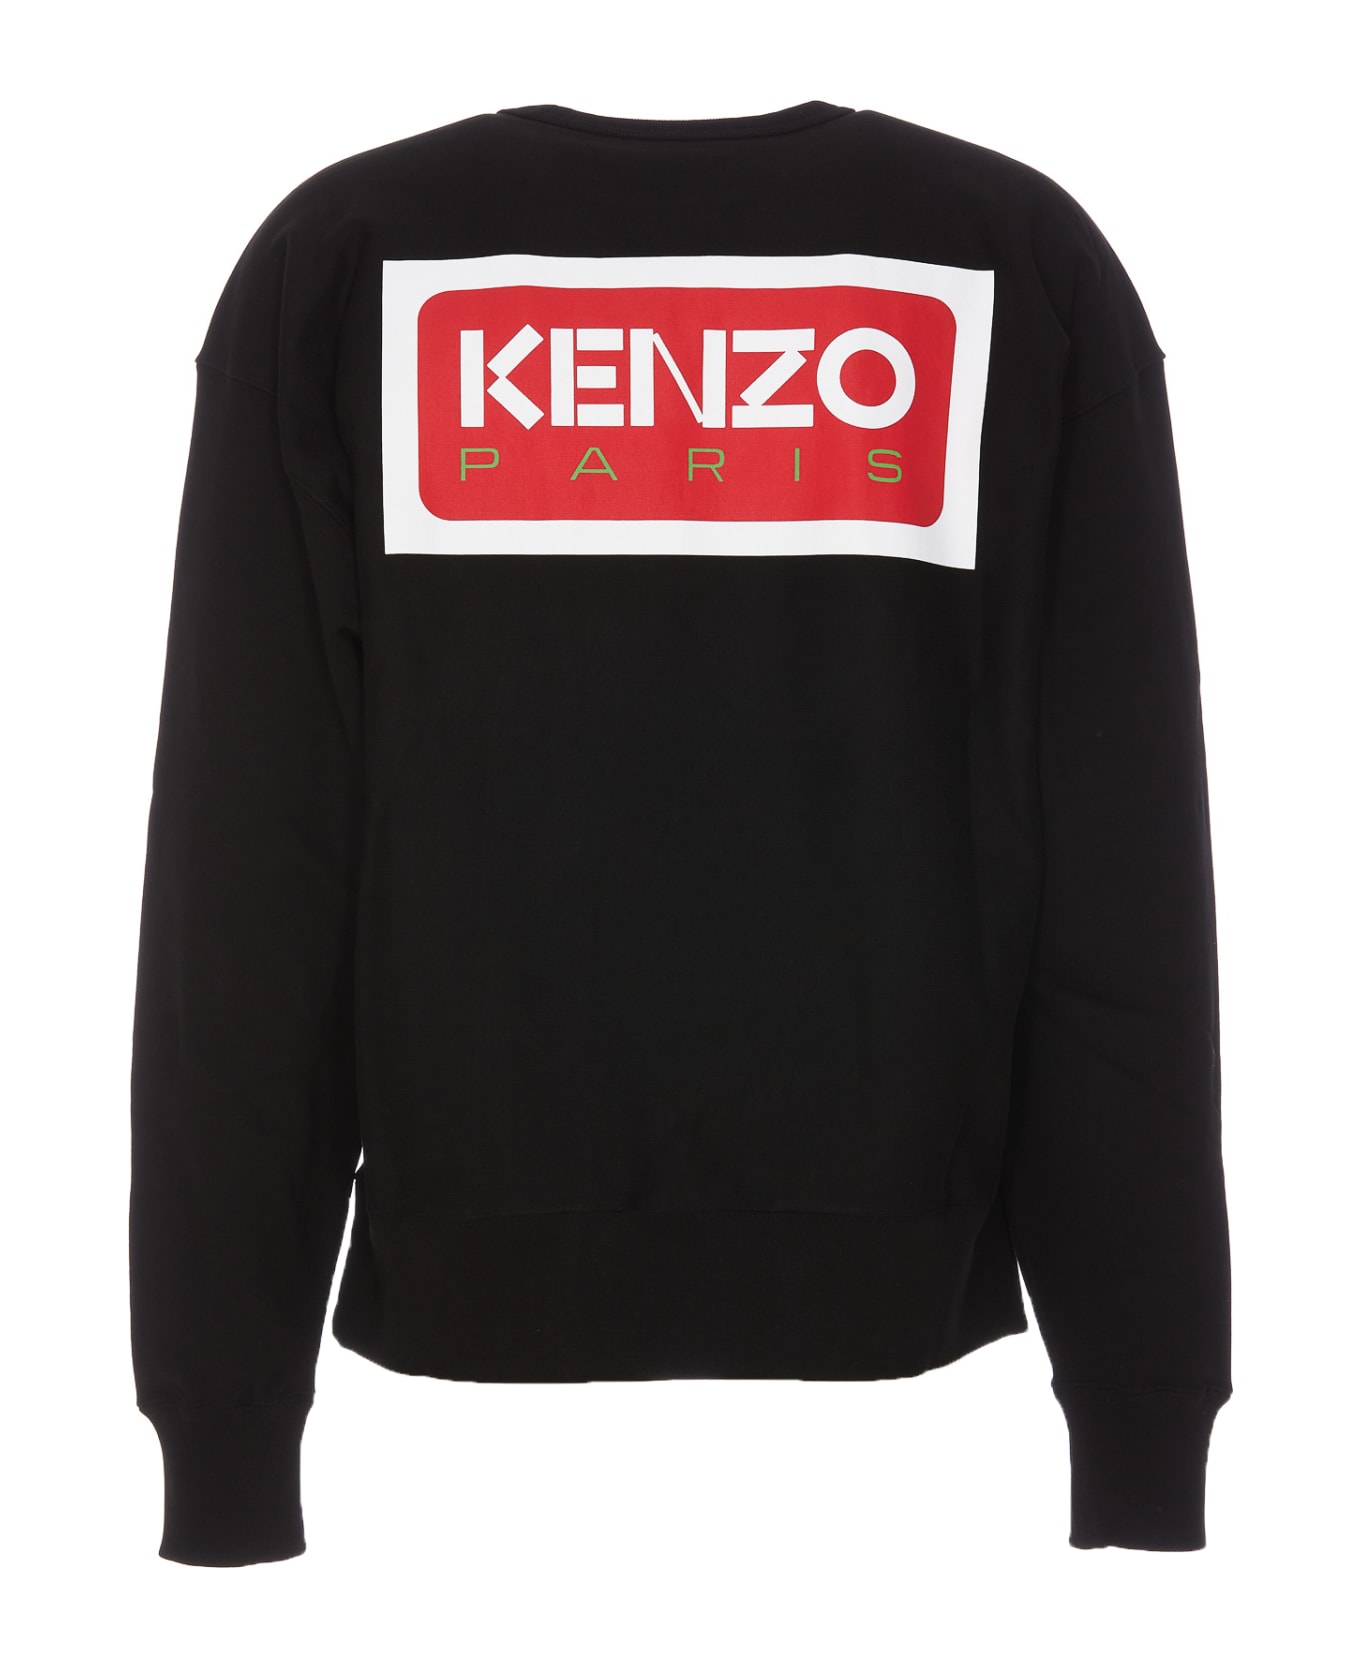 Kenzo Paris Sweatshirt - BLACK フリース